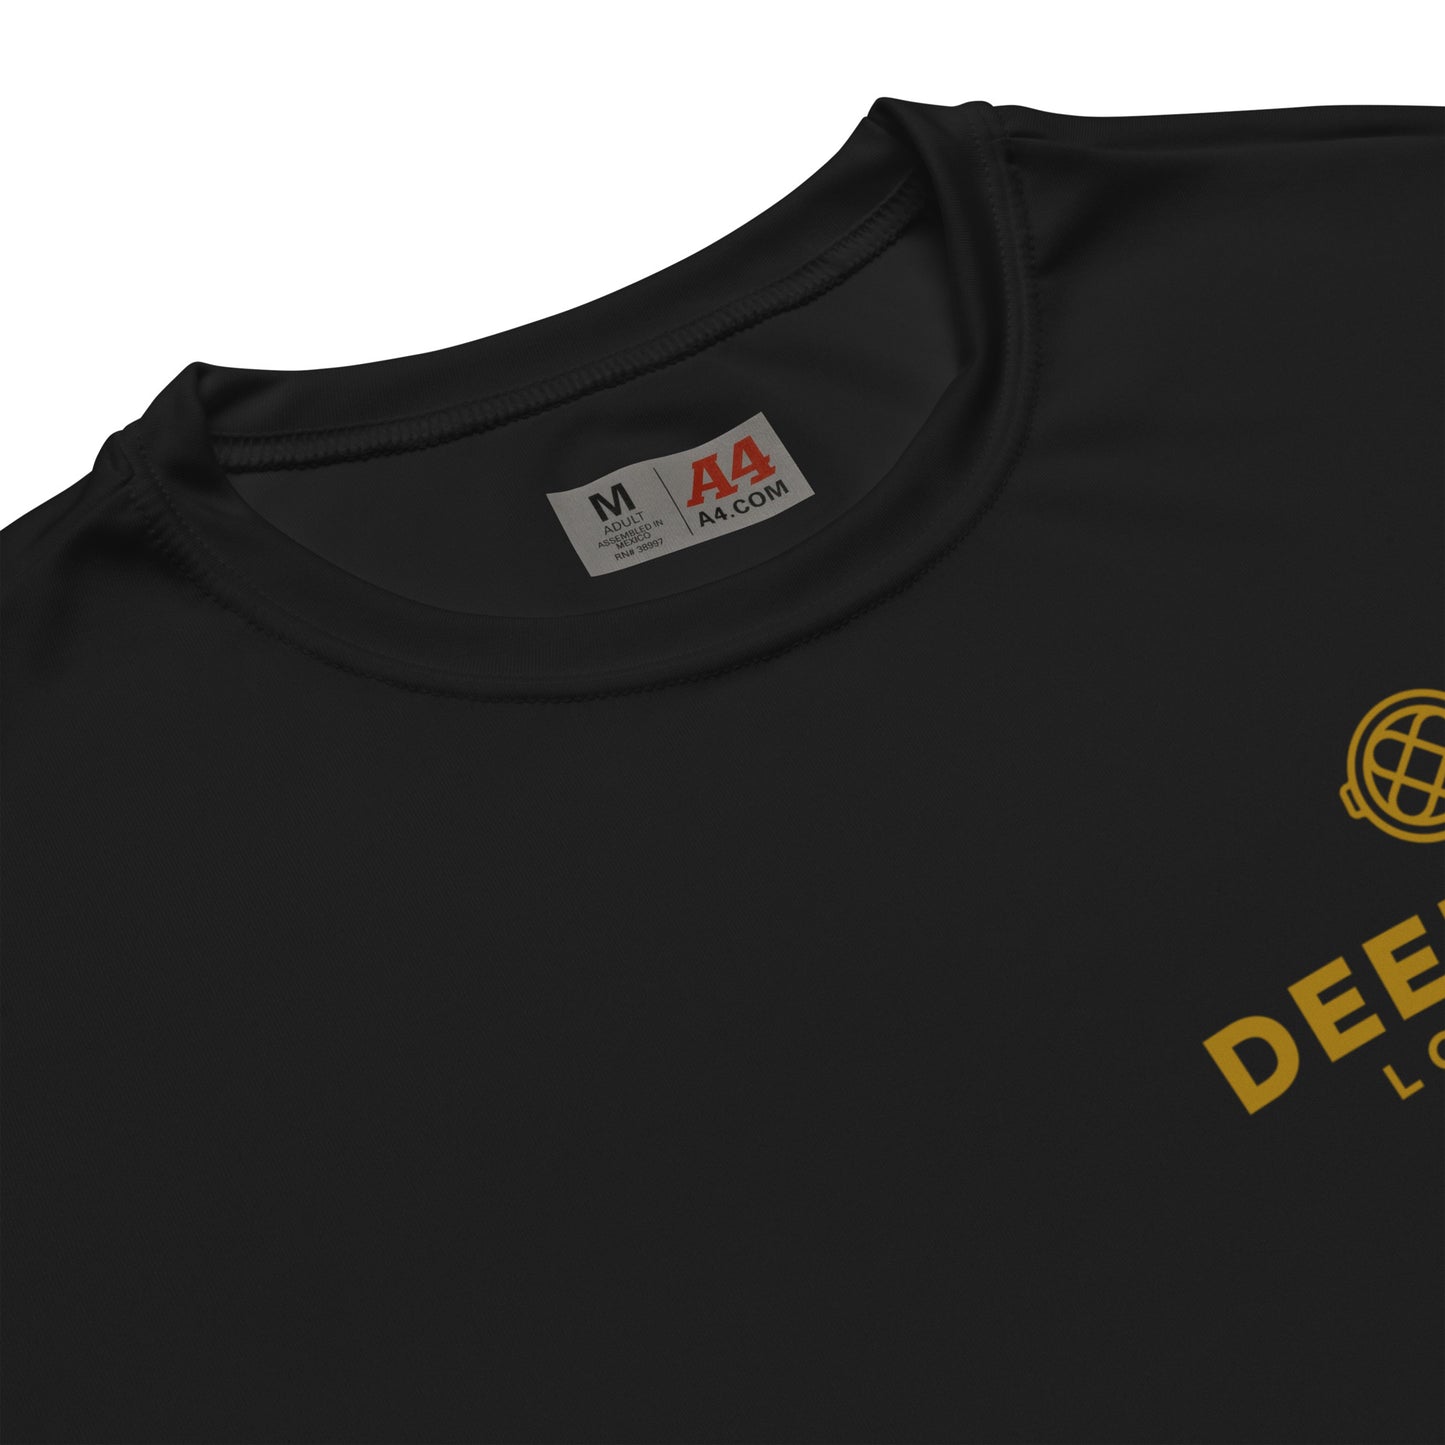 DEEPEA Locker / Made Under Pressure crew neck t-shirt